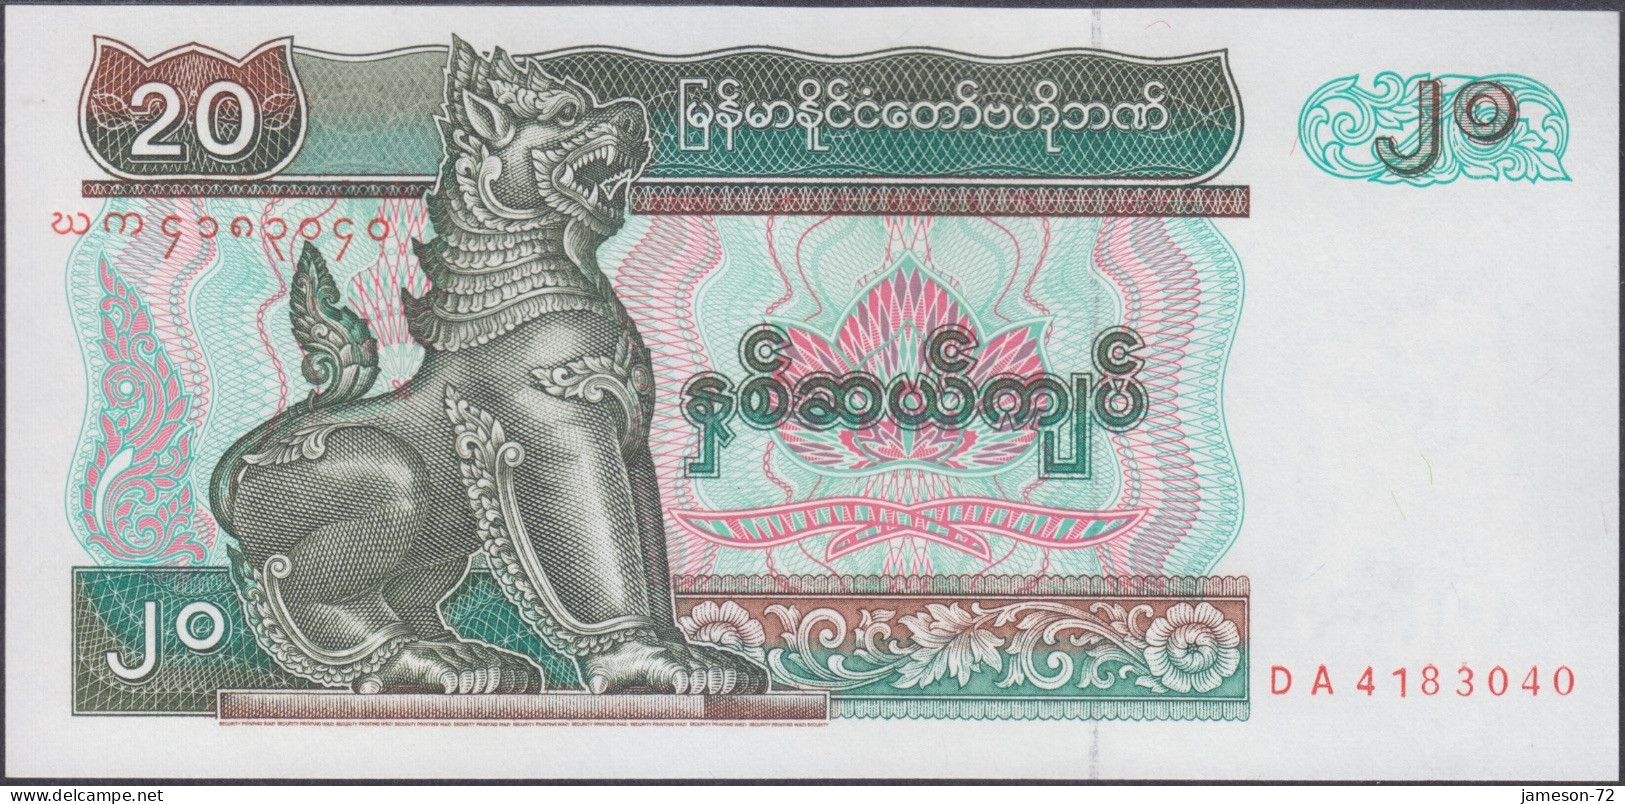 MYANMAR - 20 Kyat ND (1996) P# 72 Central Bank Of Myanmar Asia Banknote - Edelweiss Coins - Myanmar